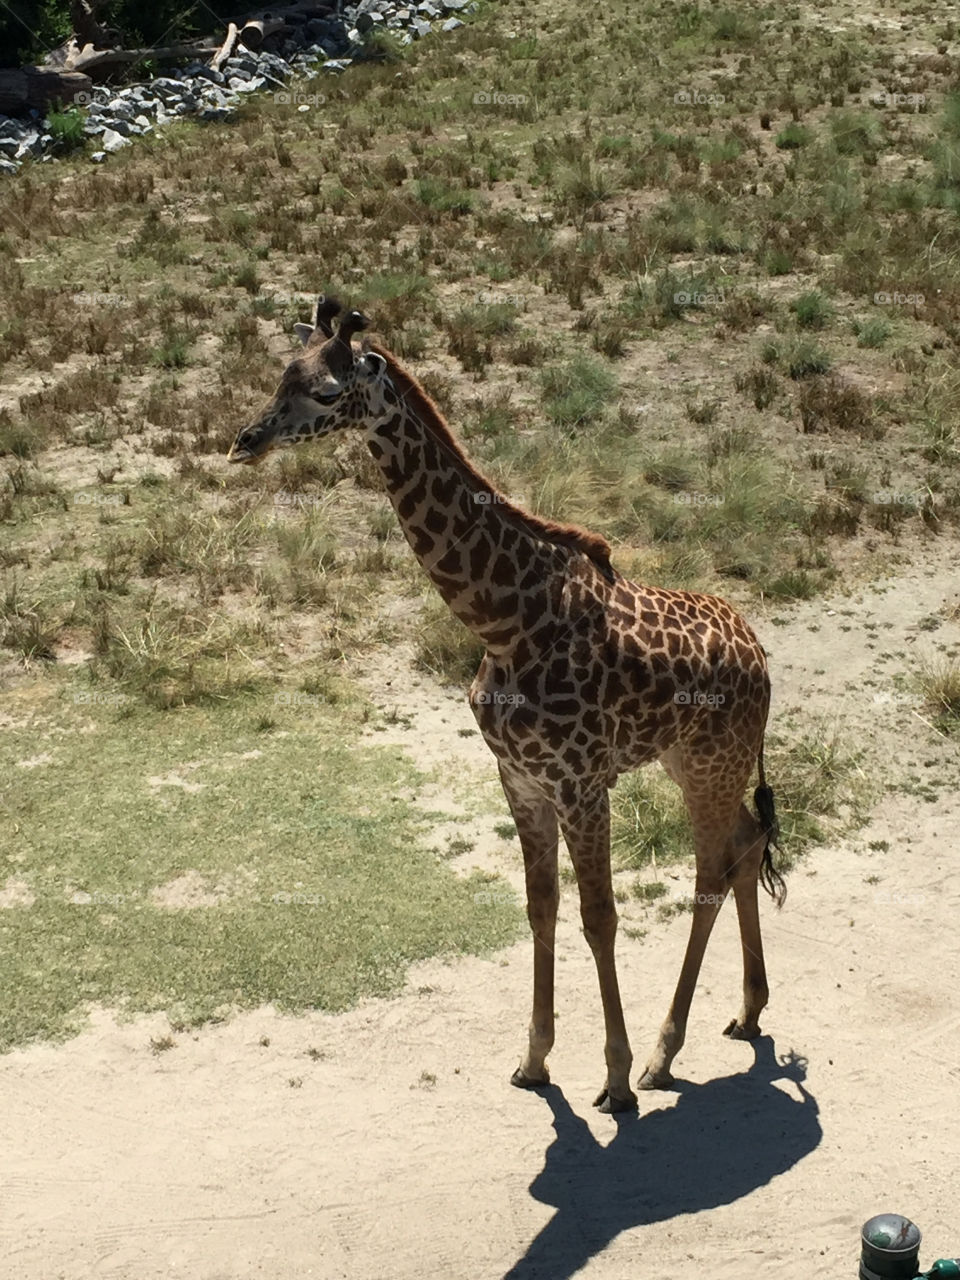 Giraffe at the Virginia Zoo in Norfolk